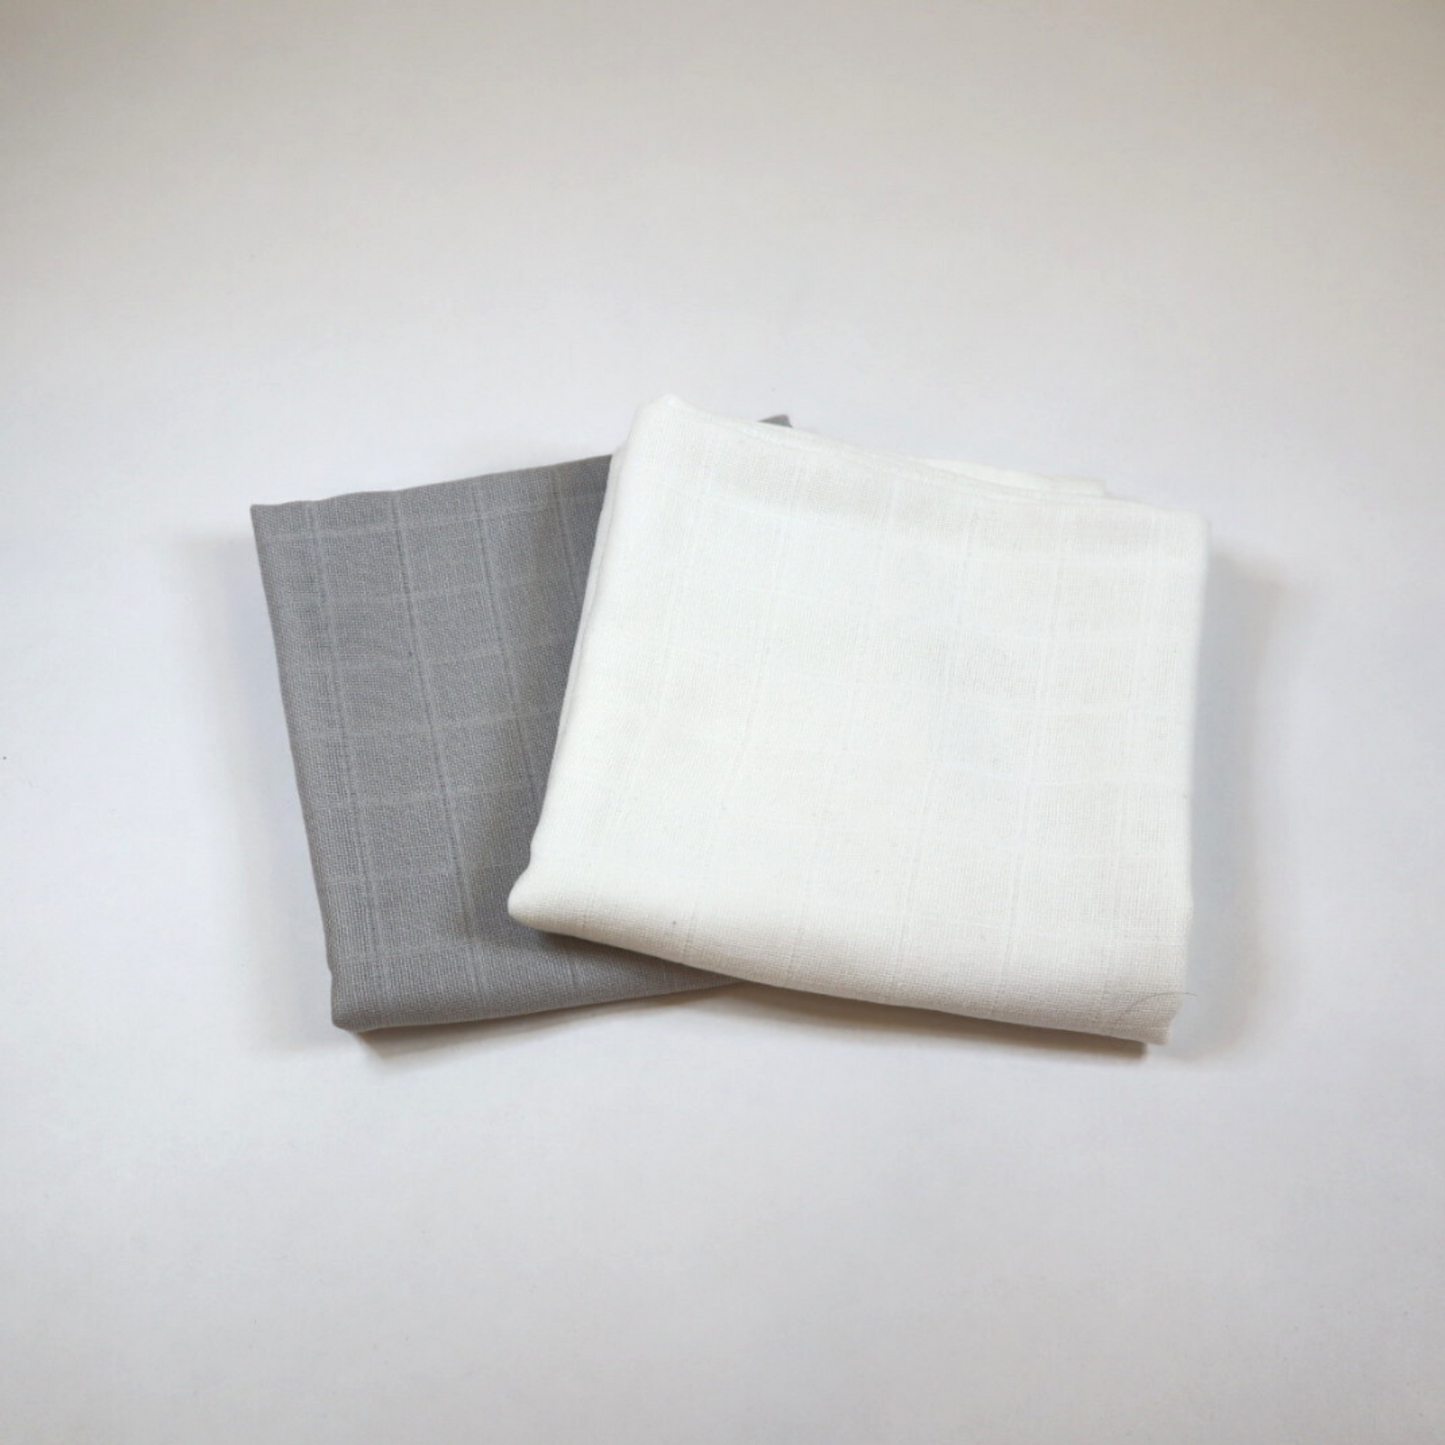 Personalised Medium Baby Keepsake Box Gift Hamper - Welcome To The World - White